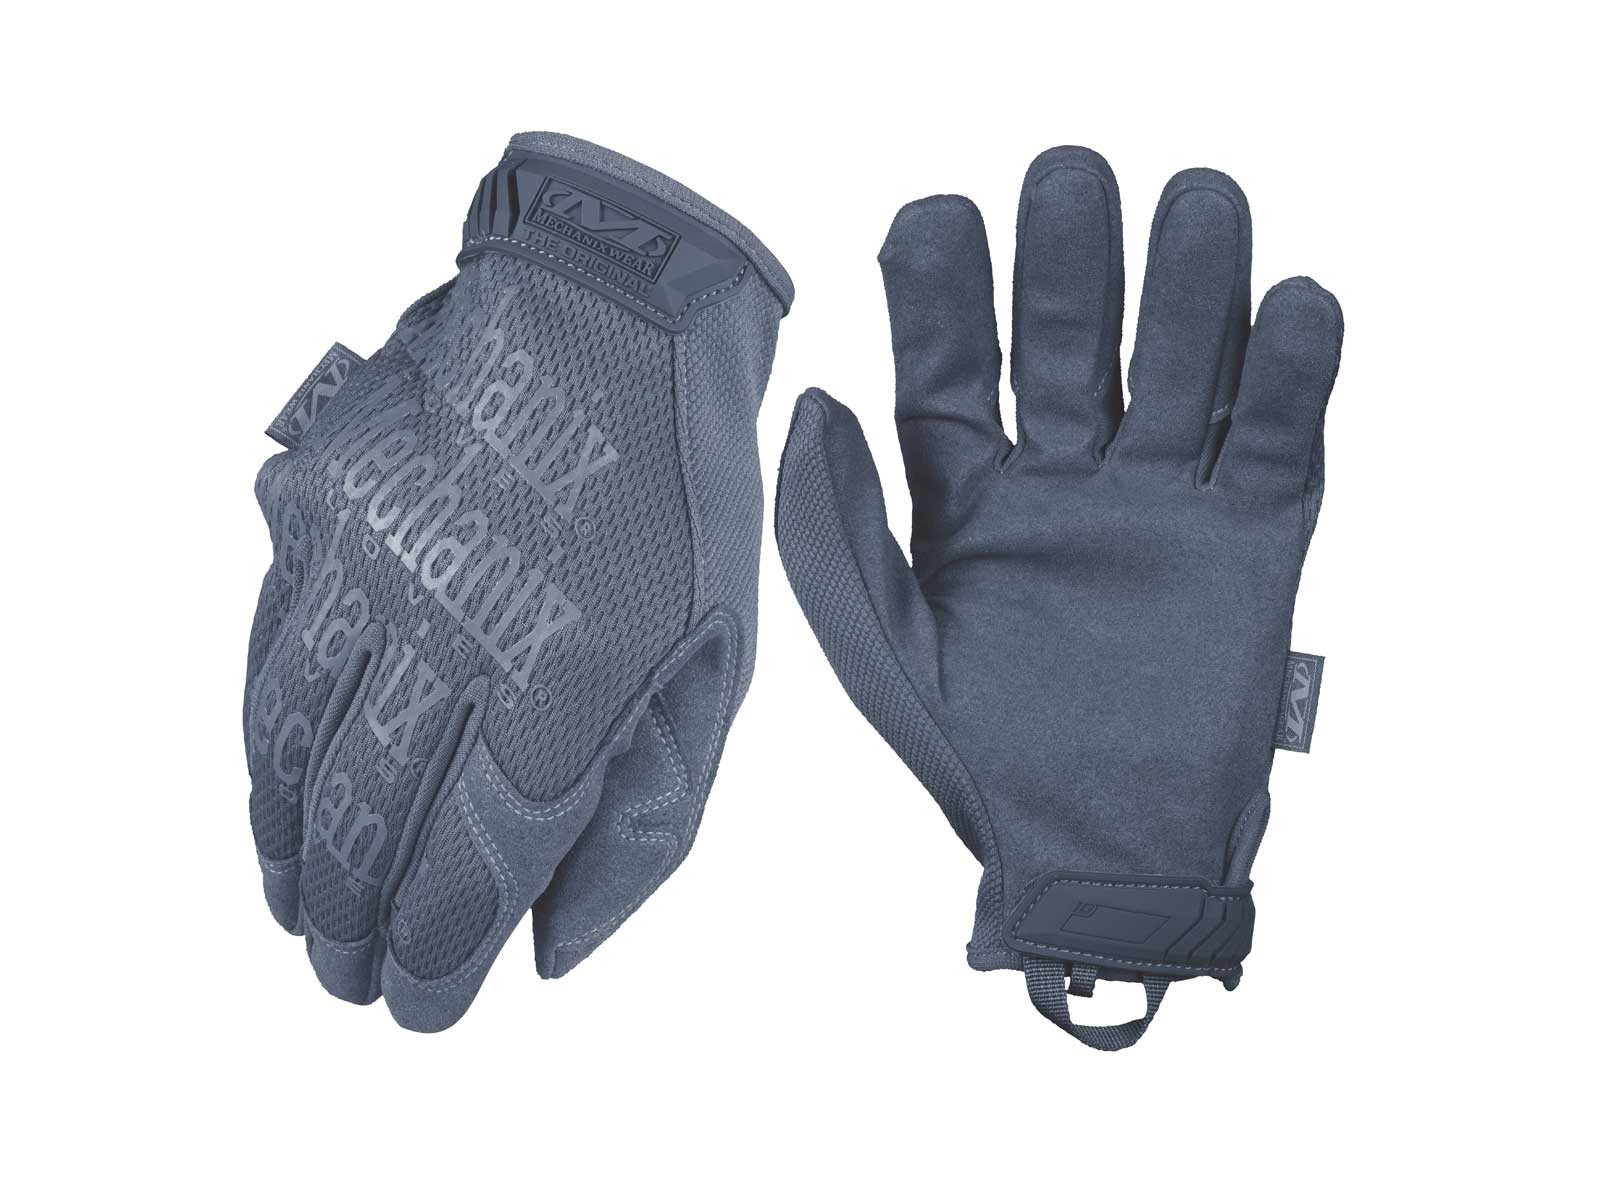 Mechanix Original Glove Insulated - X Large